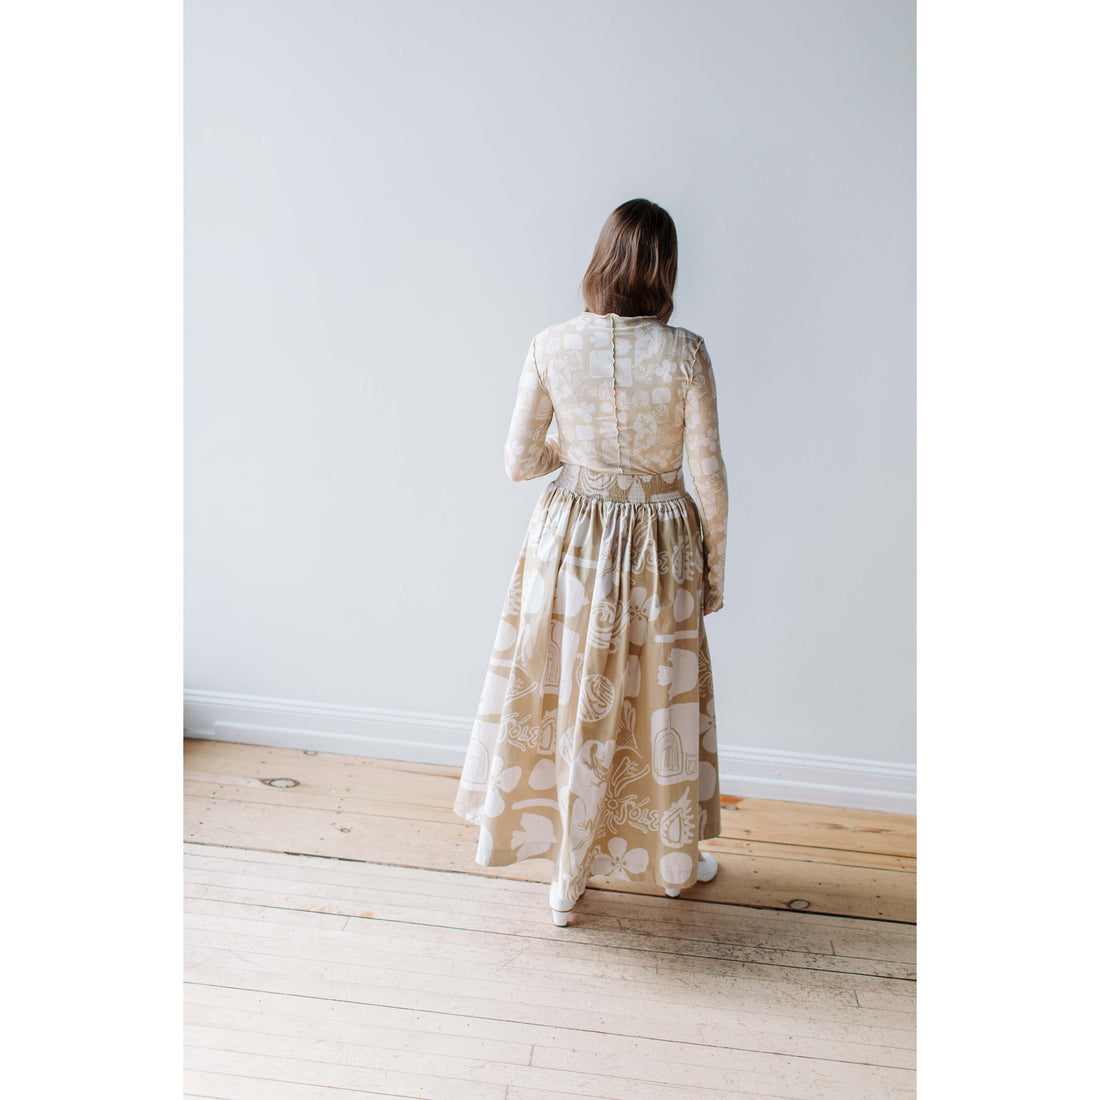 Rodebjer Taemoo Print Skirt in Linen